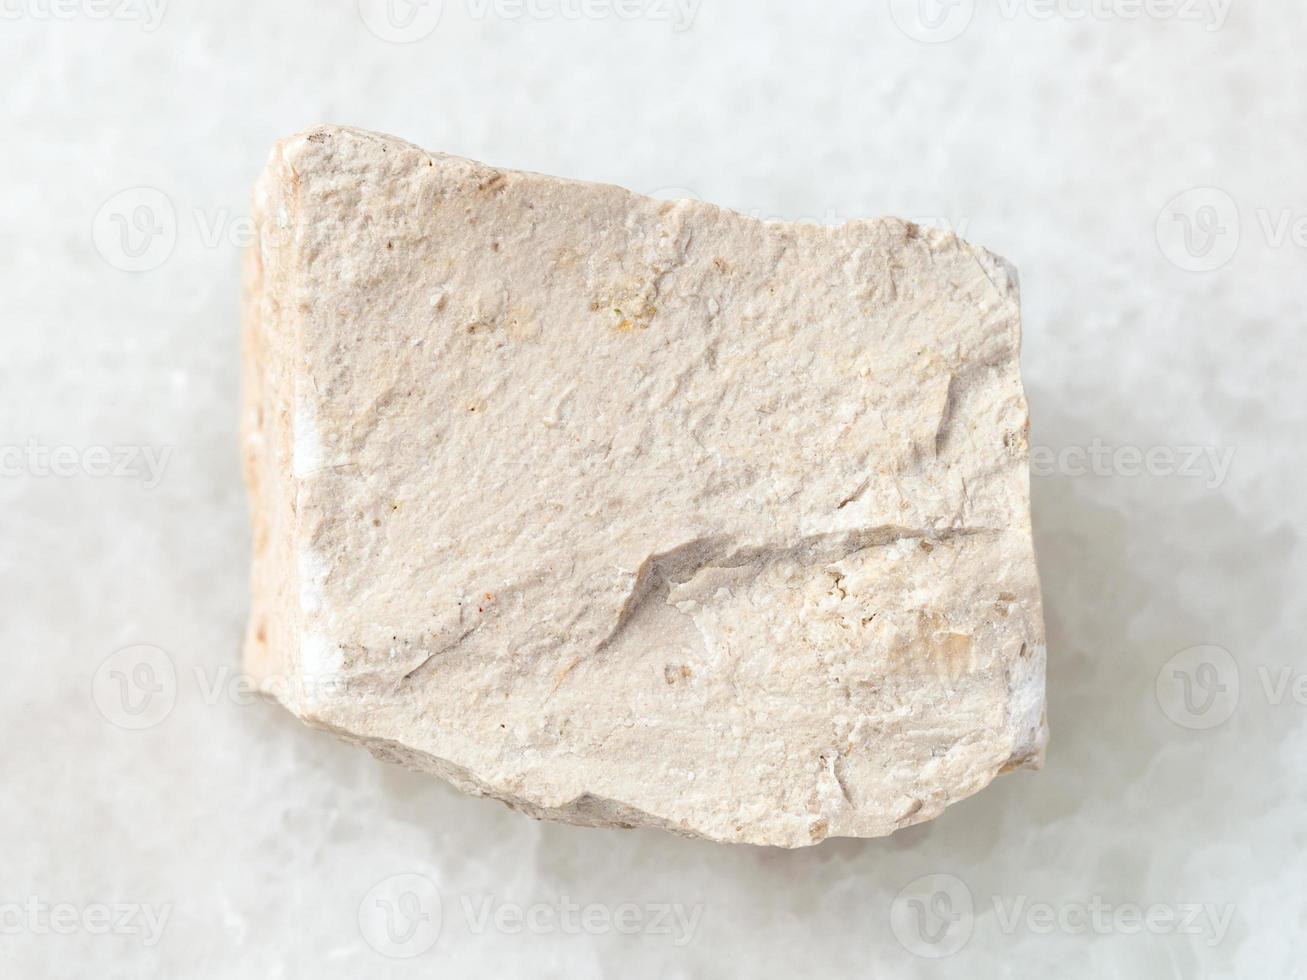 raw chemical limestone stone on white photo